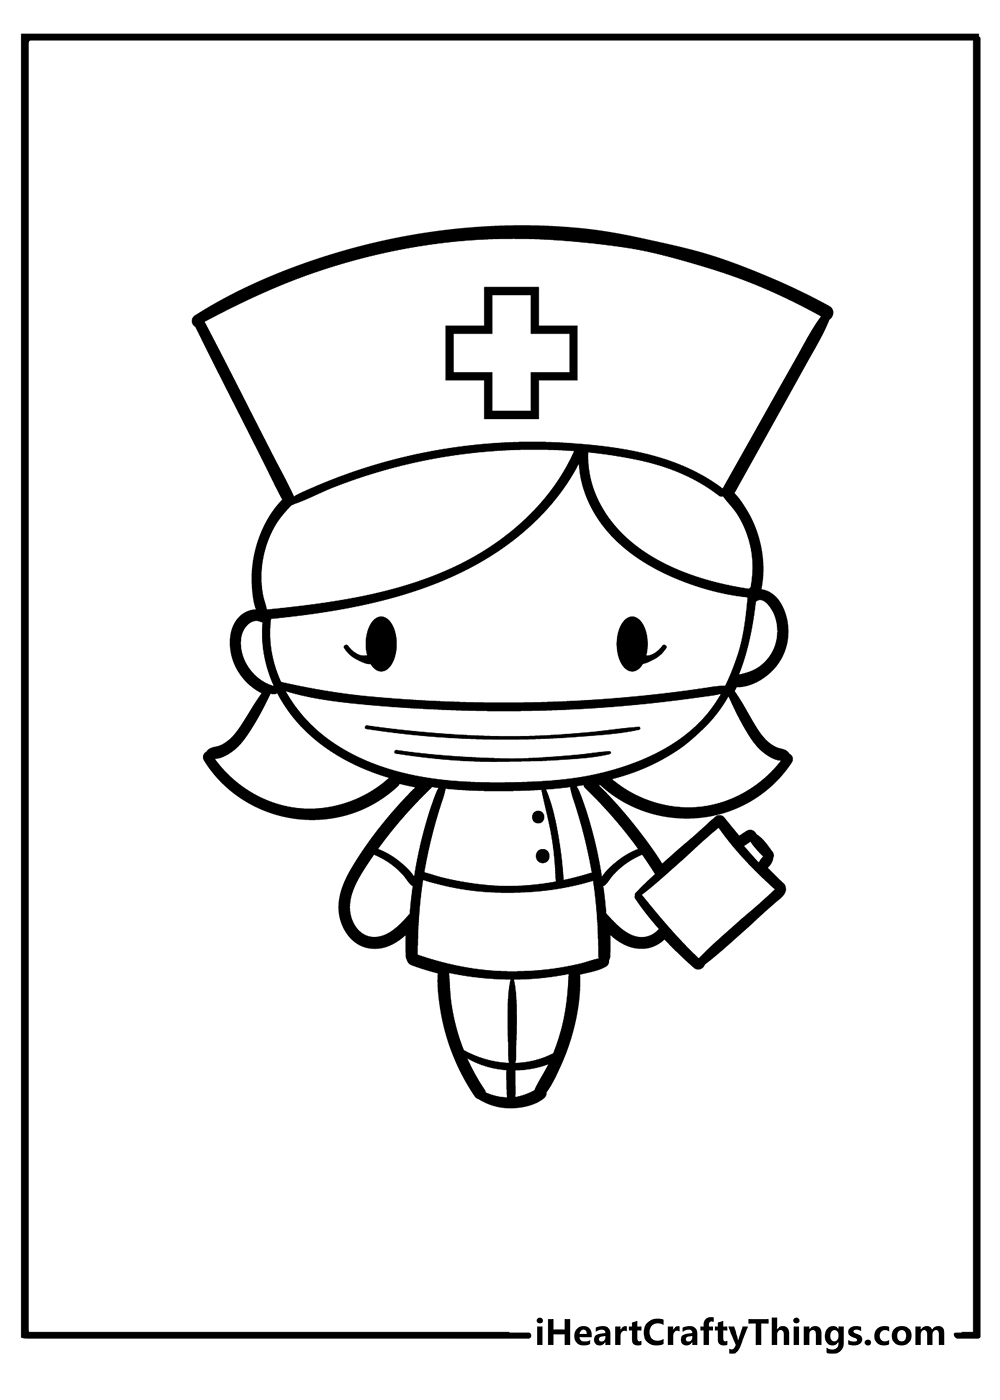 Nurse coloring pages free printables